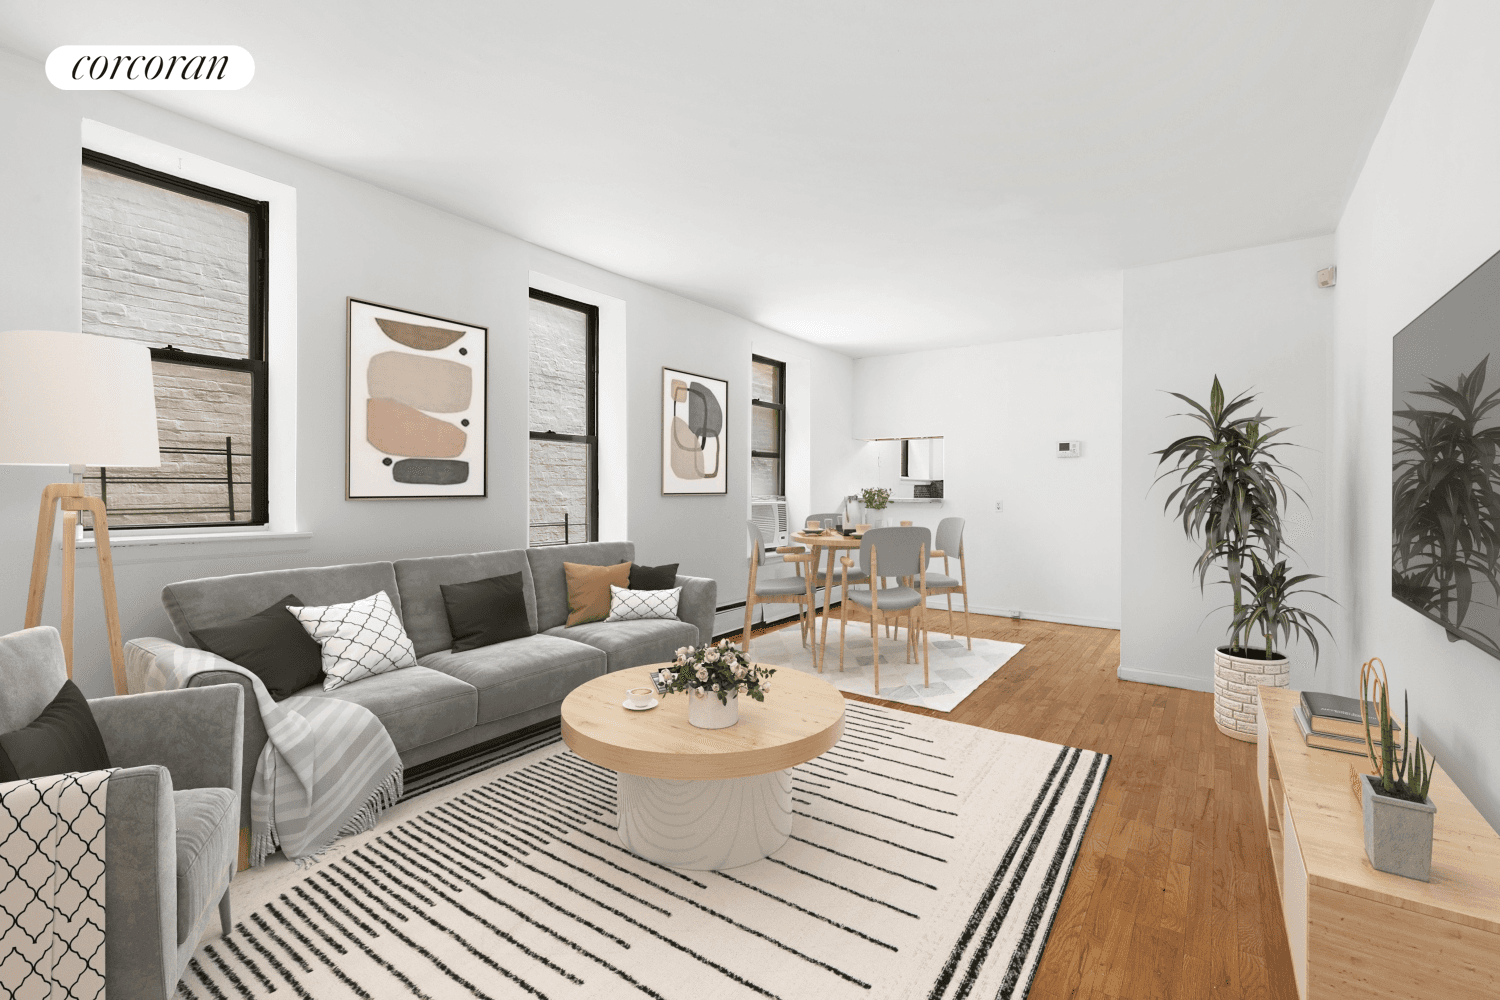 Introducing a corner unit charming gem in the heart of Saint Nicholas Court Condominium, located at 66 72 Saint Nicholas Avenue.